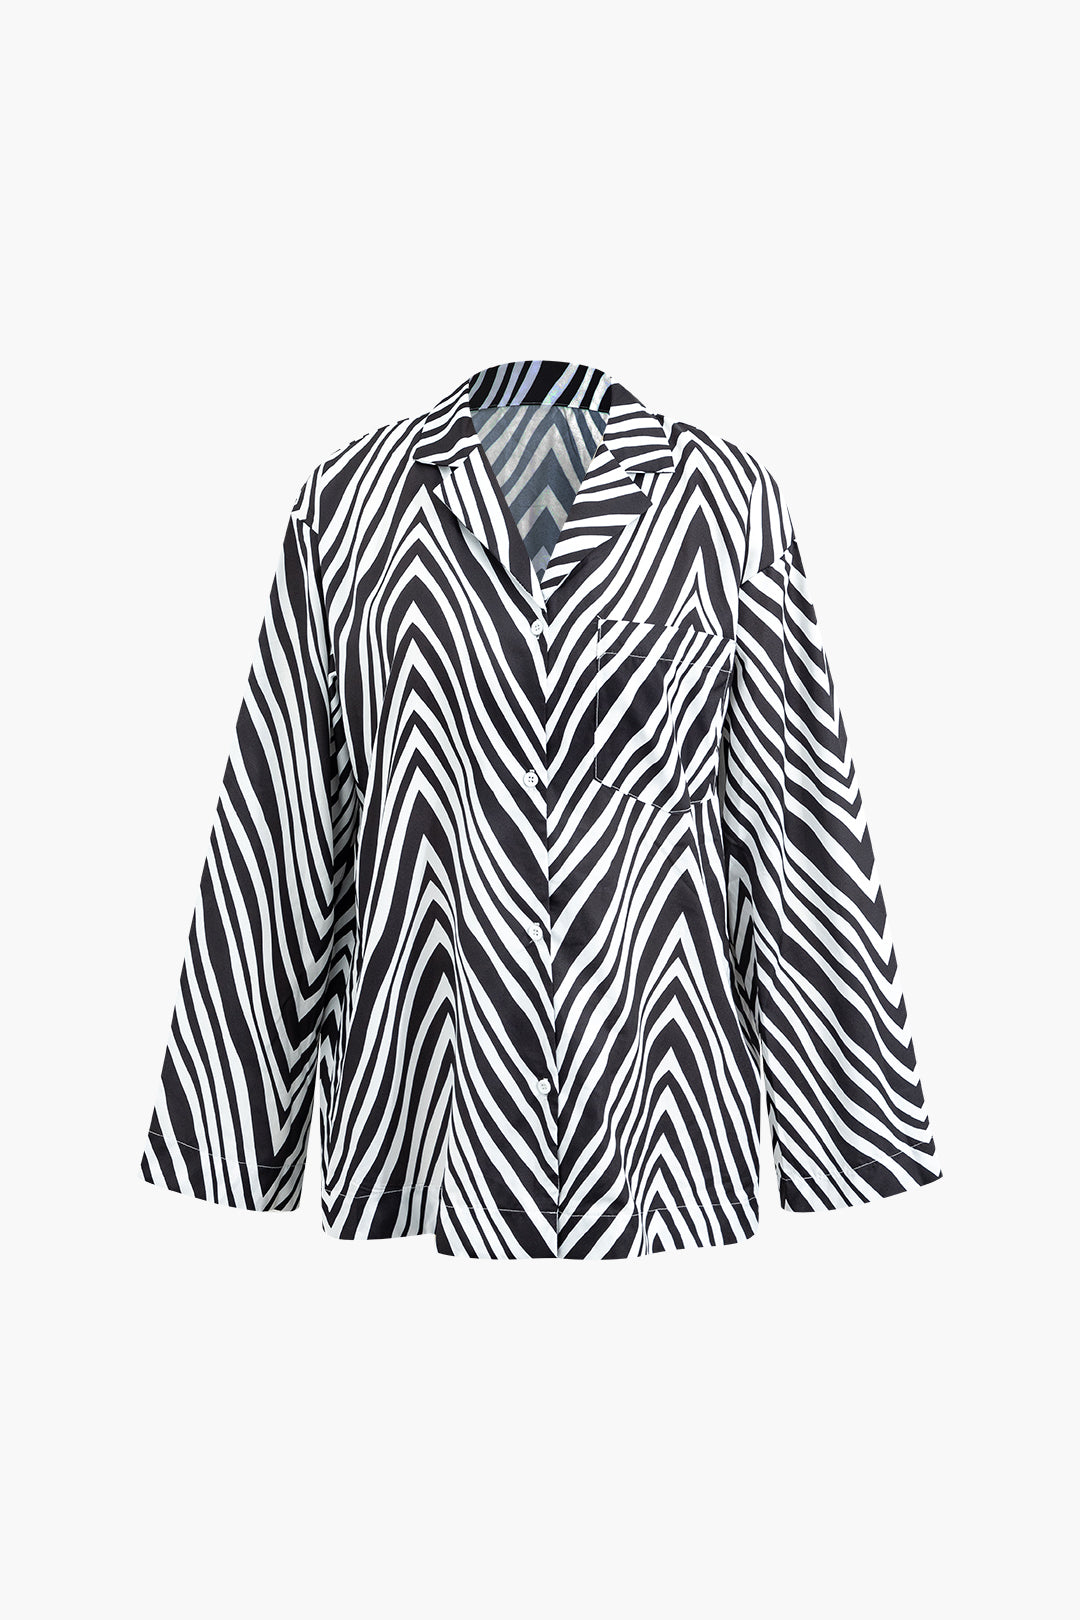 Zebra-stripe Print Notched Lapel Pocket Shirt And High Waist Pants Set